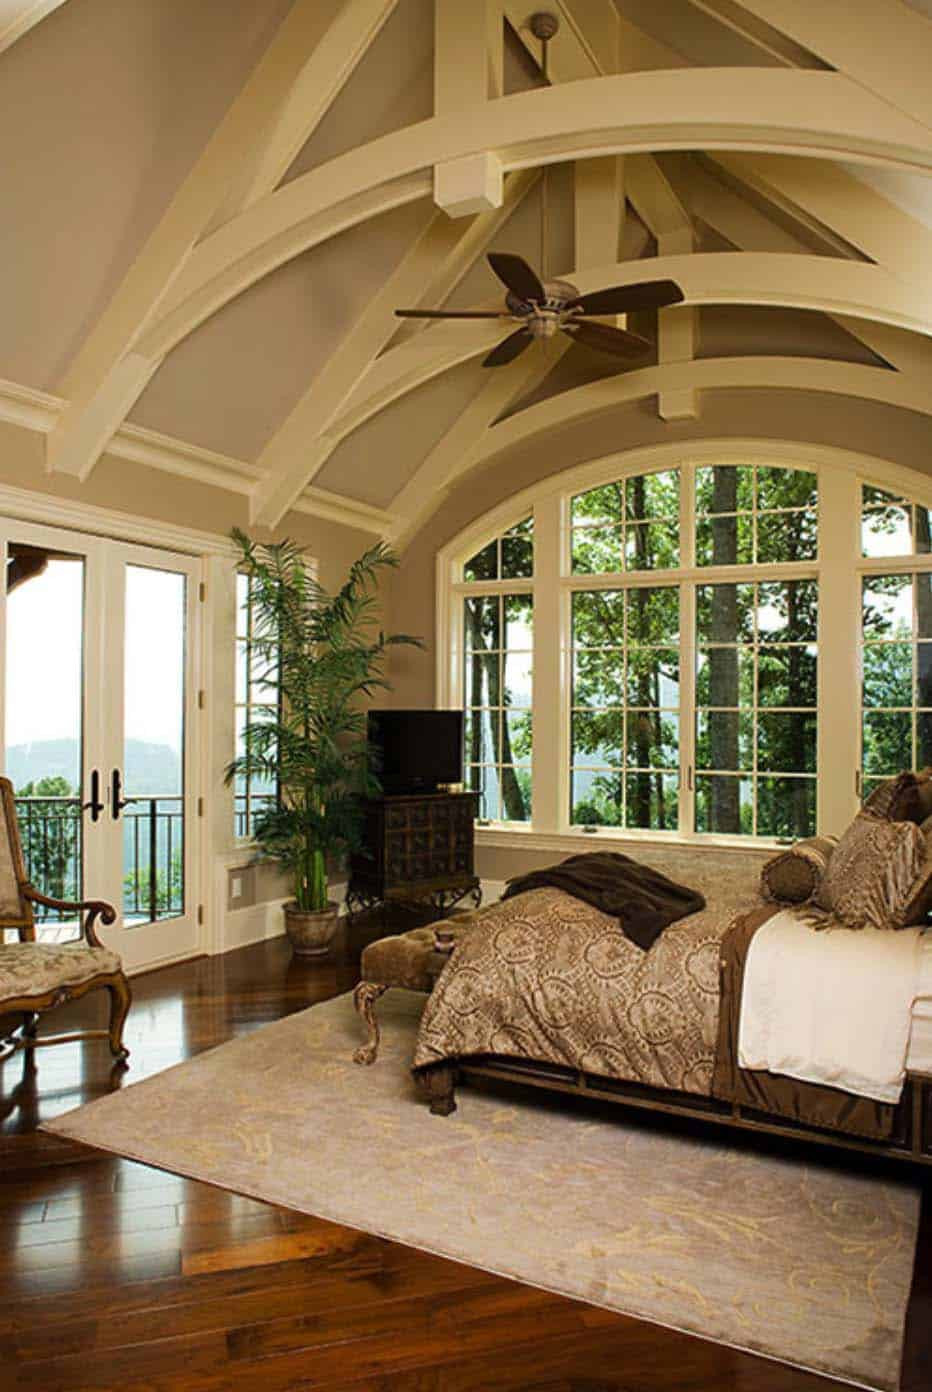 Vaulted Ceiling Master Bedroom
 33 Stunning master bedroom retreats with vaulted ceilings